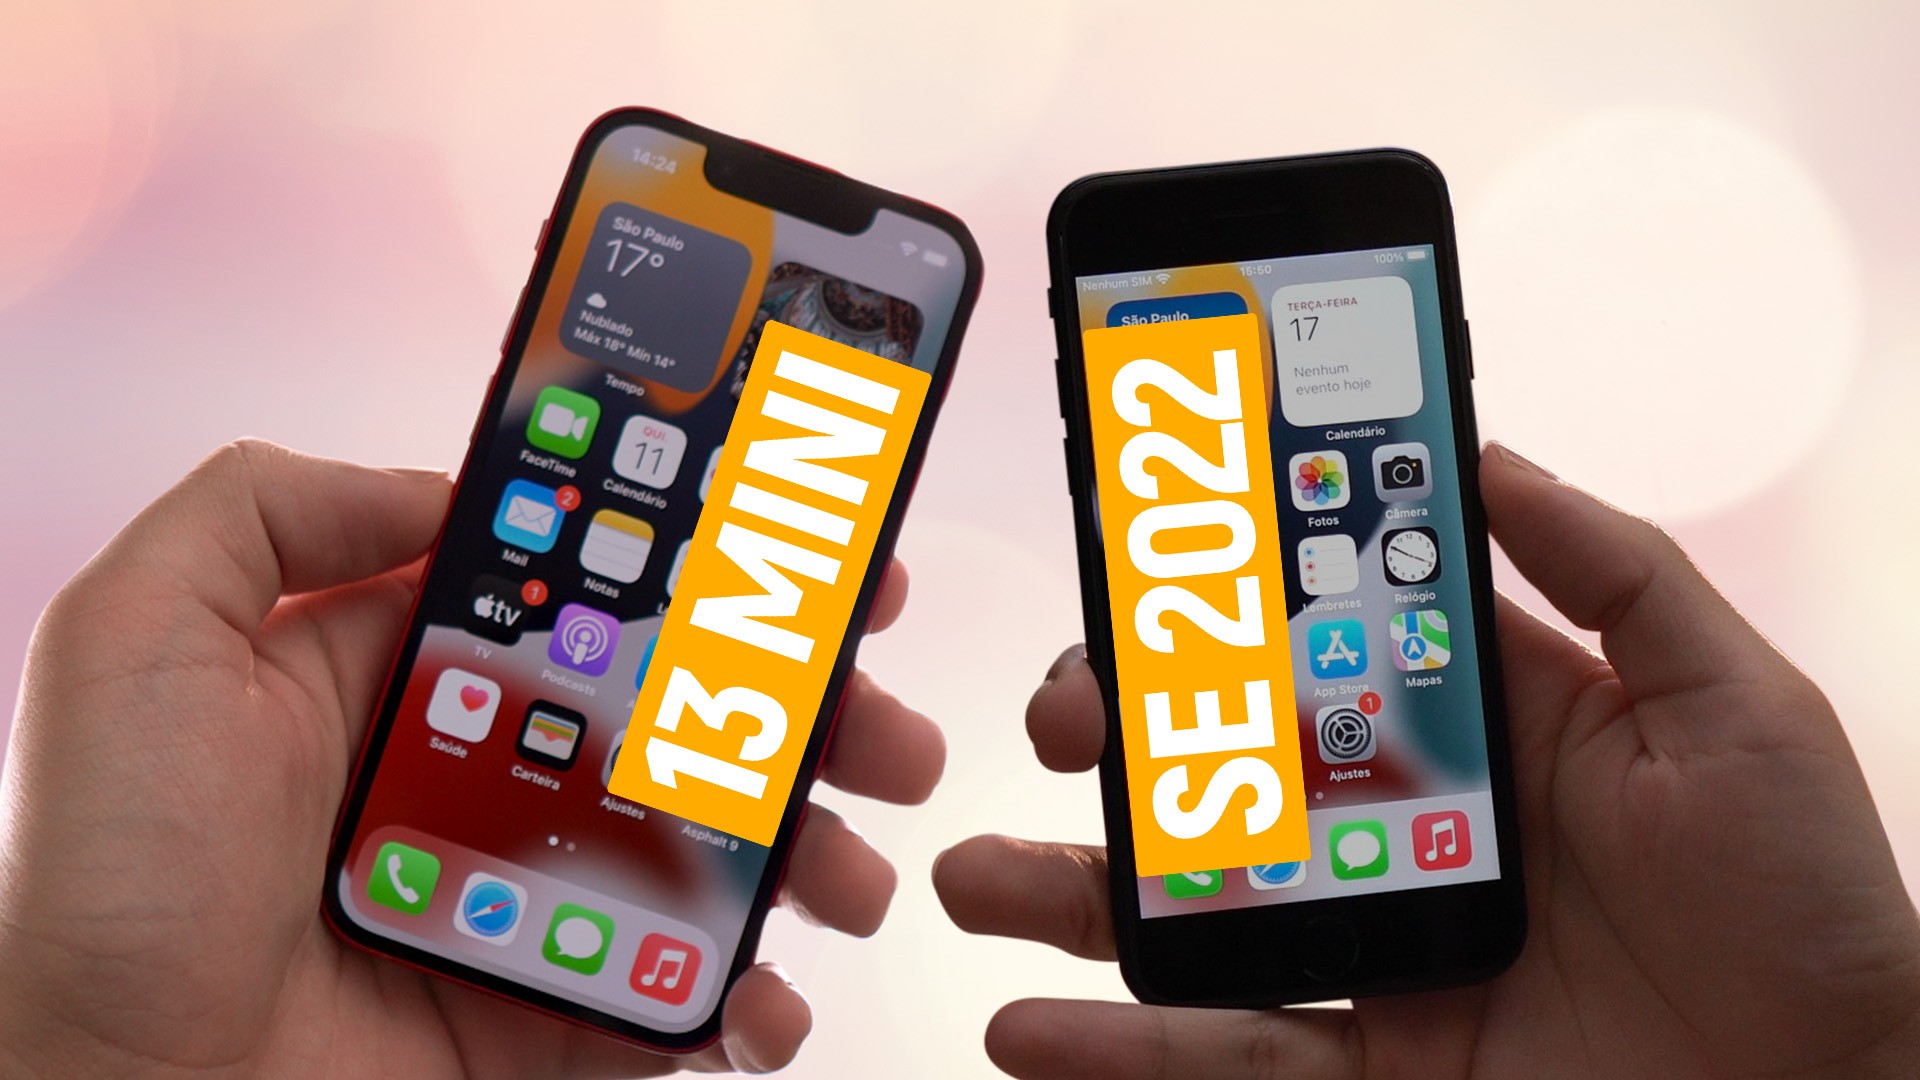 Old celulares vs novo celular